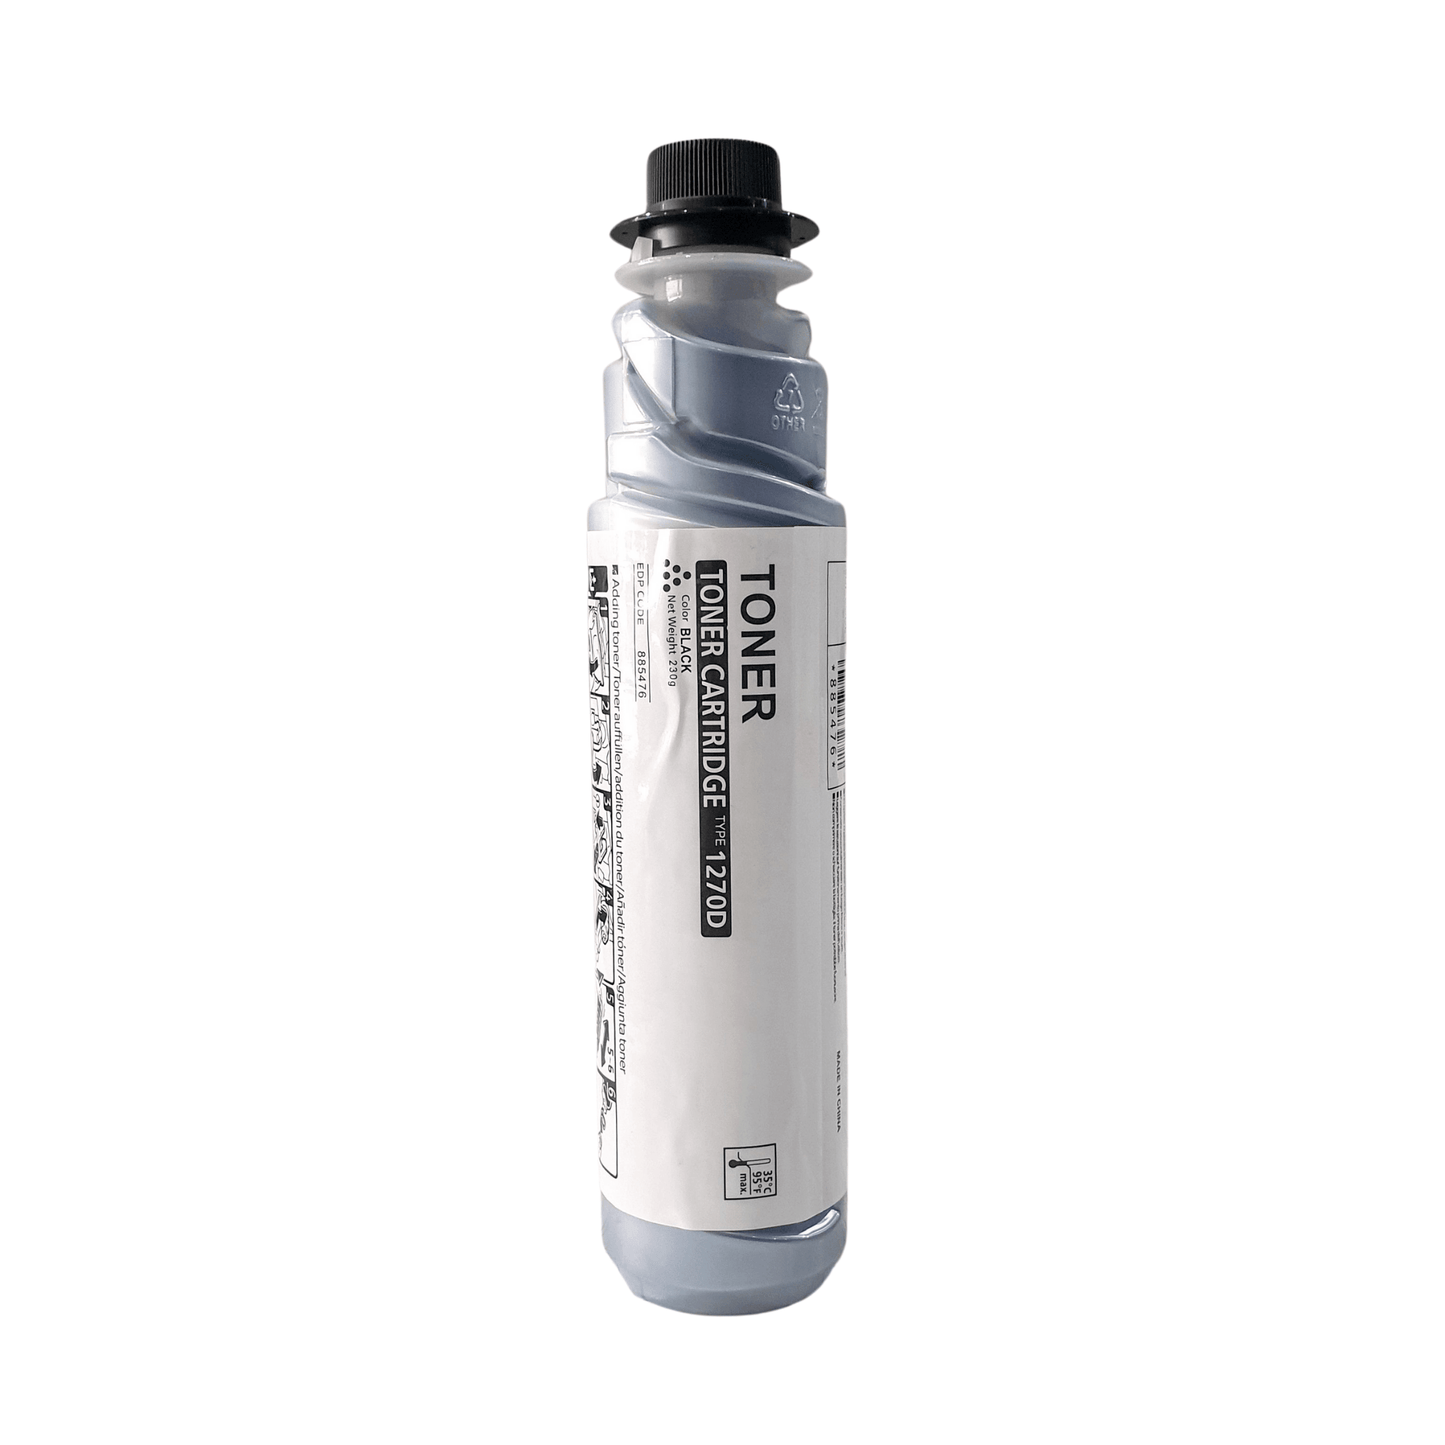 Toner Bottle Ricoh Aficio NRG MP 201 DSM 415 - 𝐏𝐑𝐄𝐌𝐈𝐄𝐑 𝐓𝐑𝐀𝐃𝐄𝐑𝐒